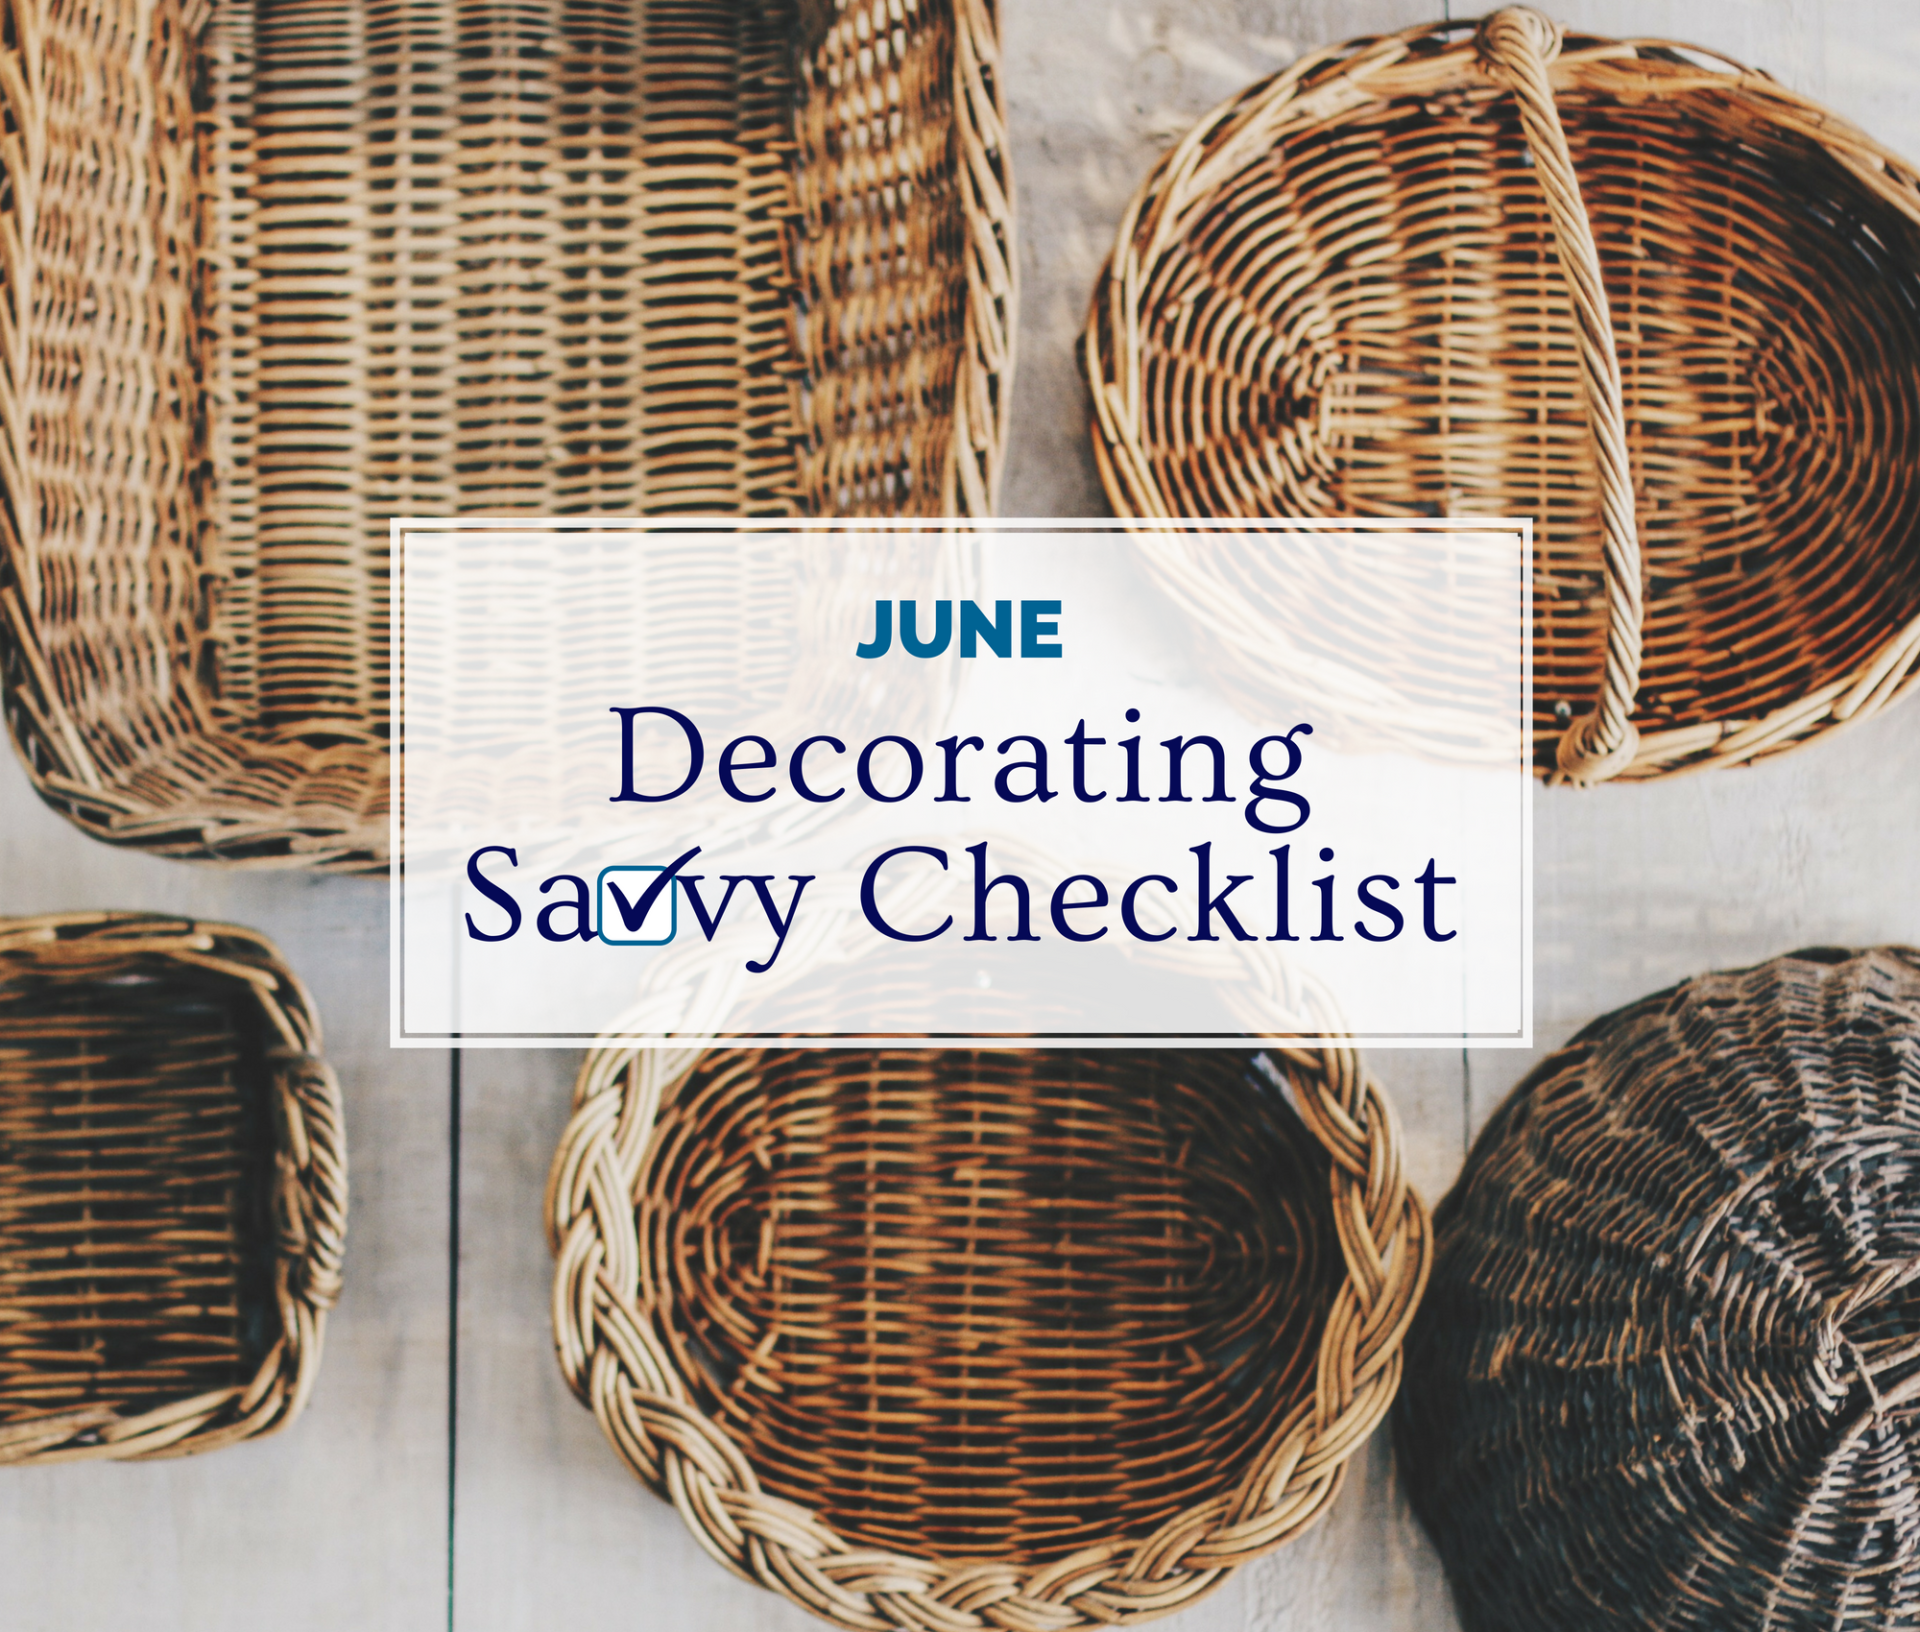 June decorating checklist